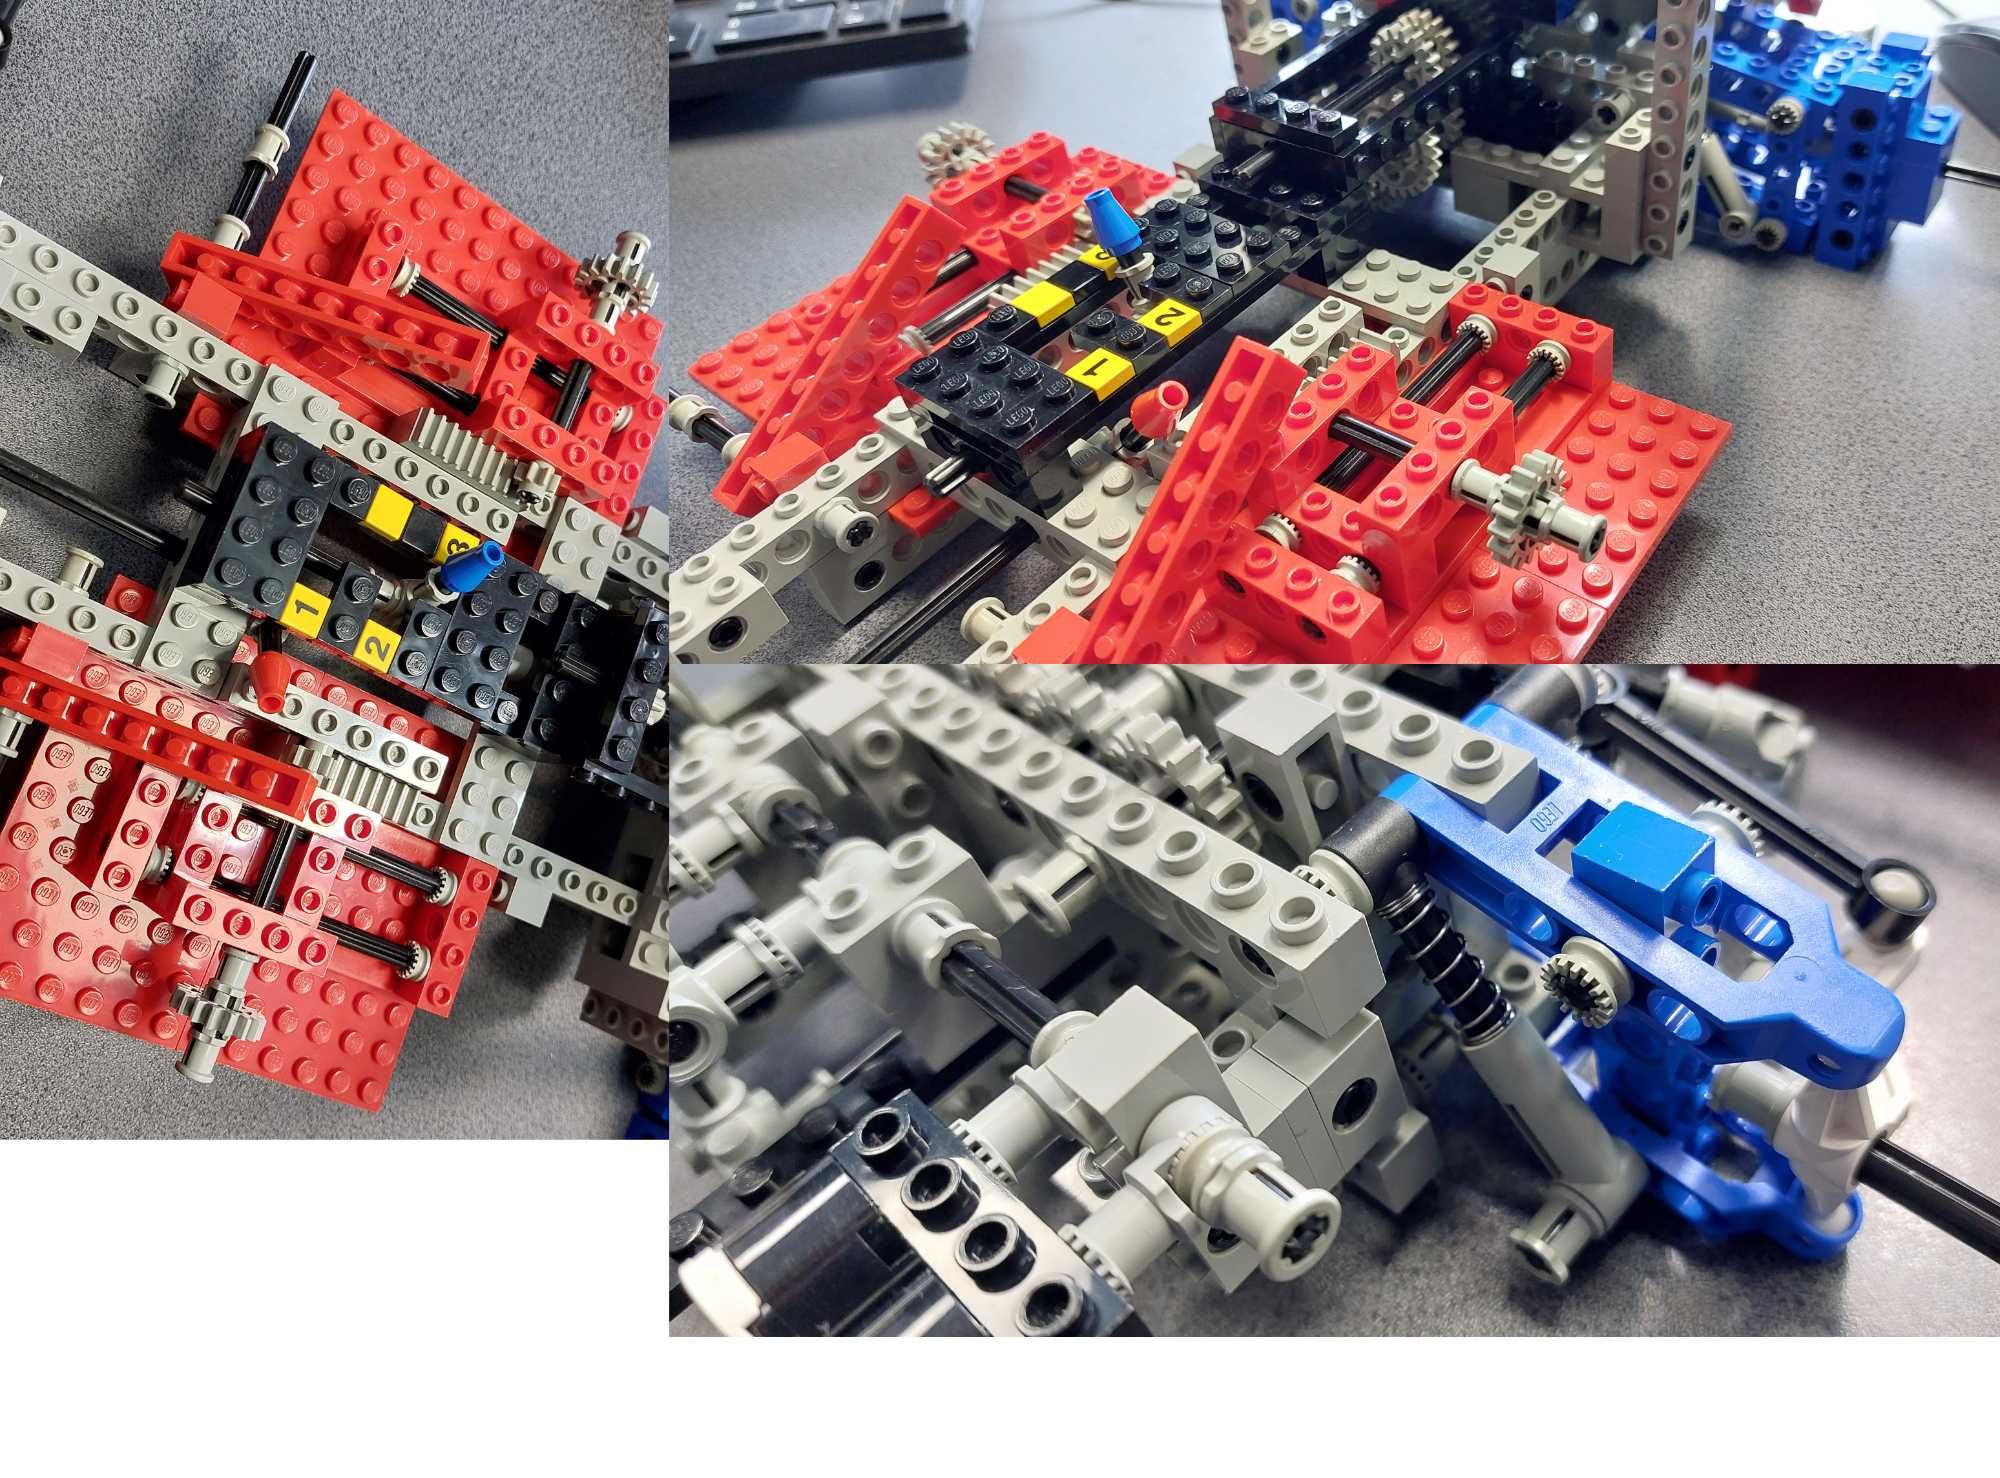 Lego Technic 8865 Test Car